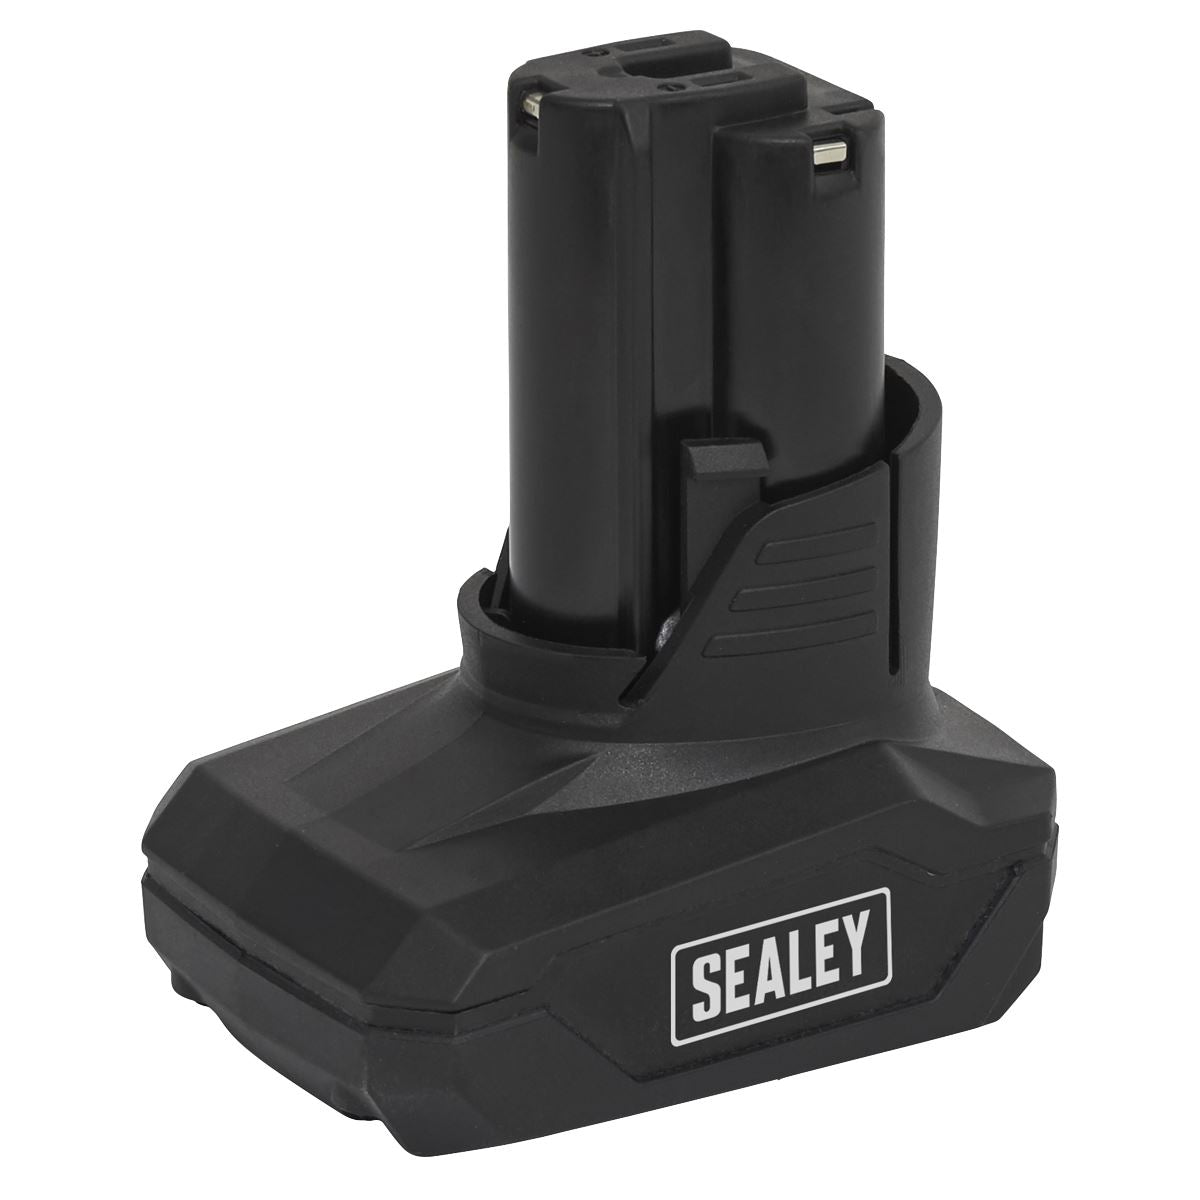 Sealey SV12 Series 6 x 12V Cordless Power Tool Kit - 3 Batteries